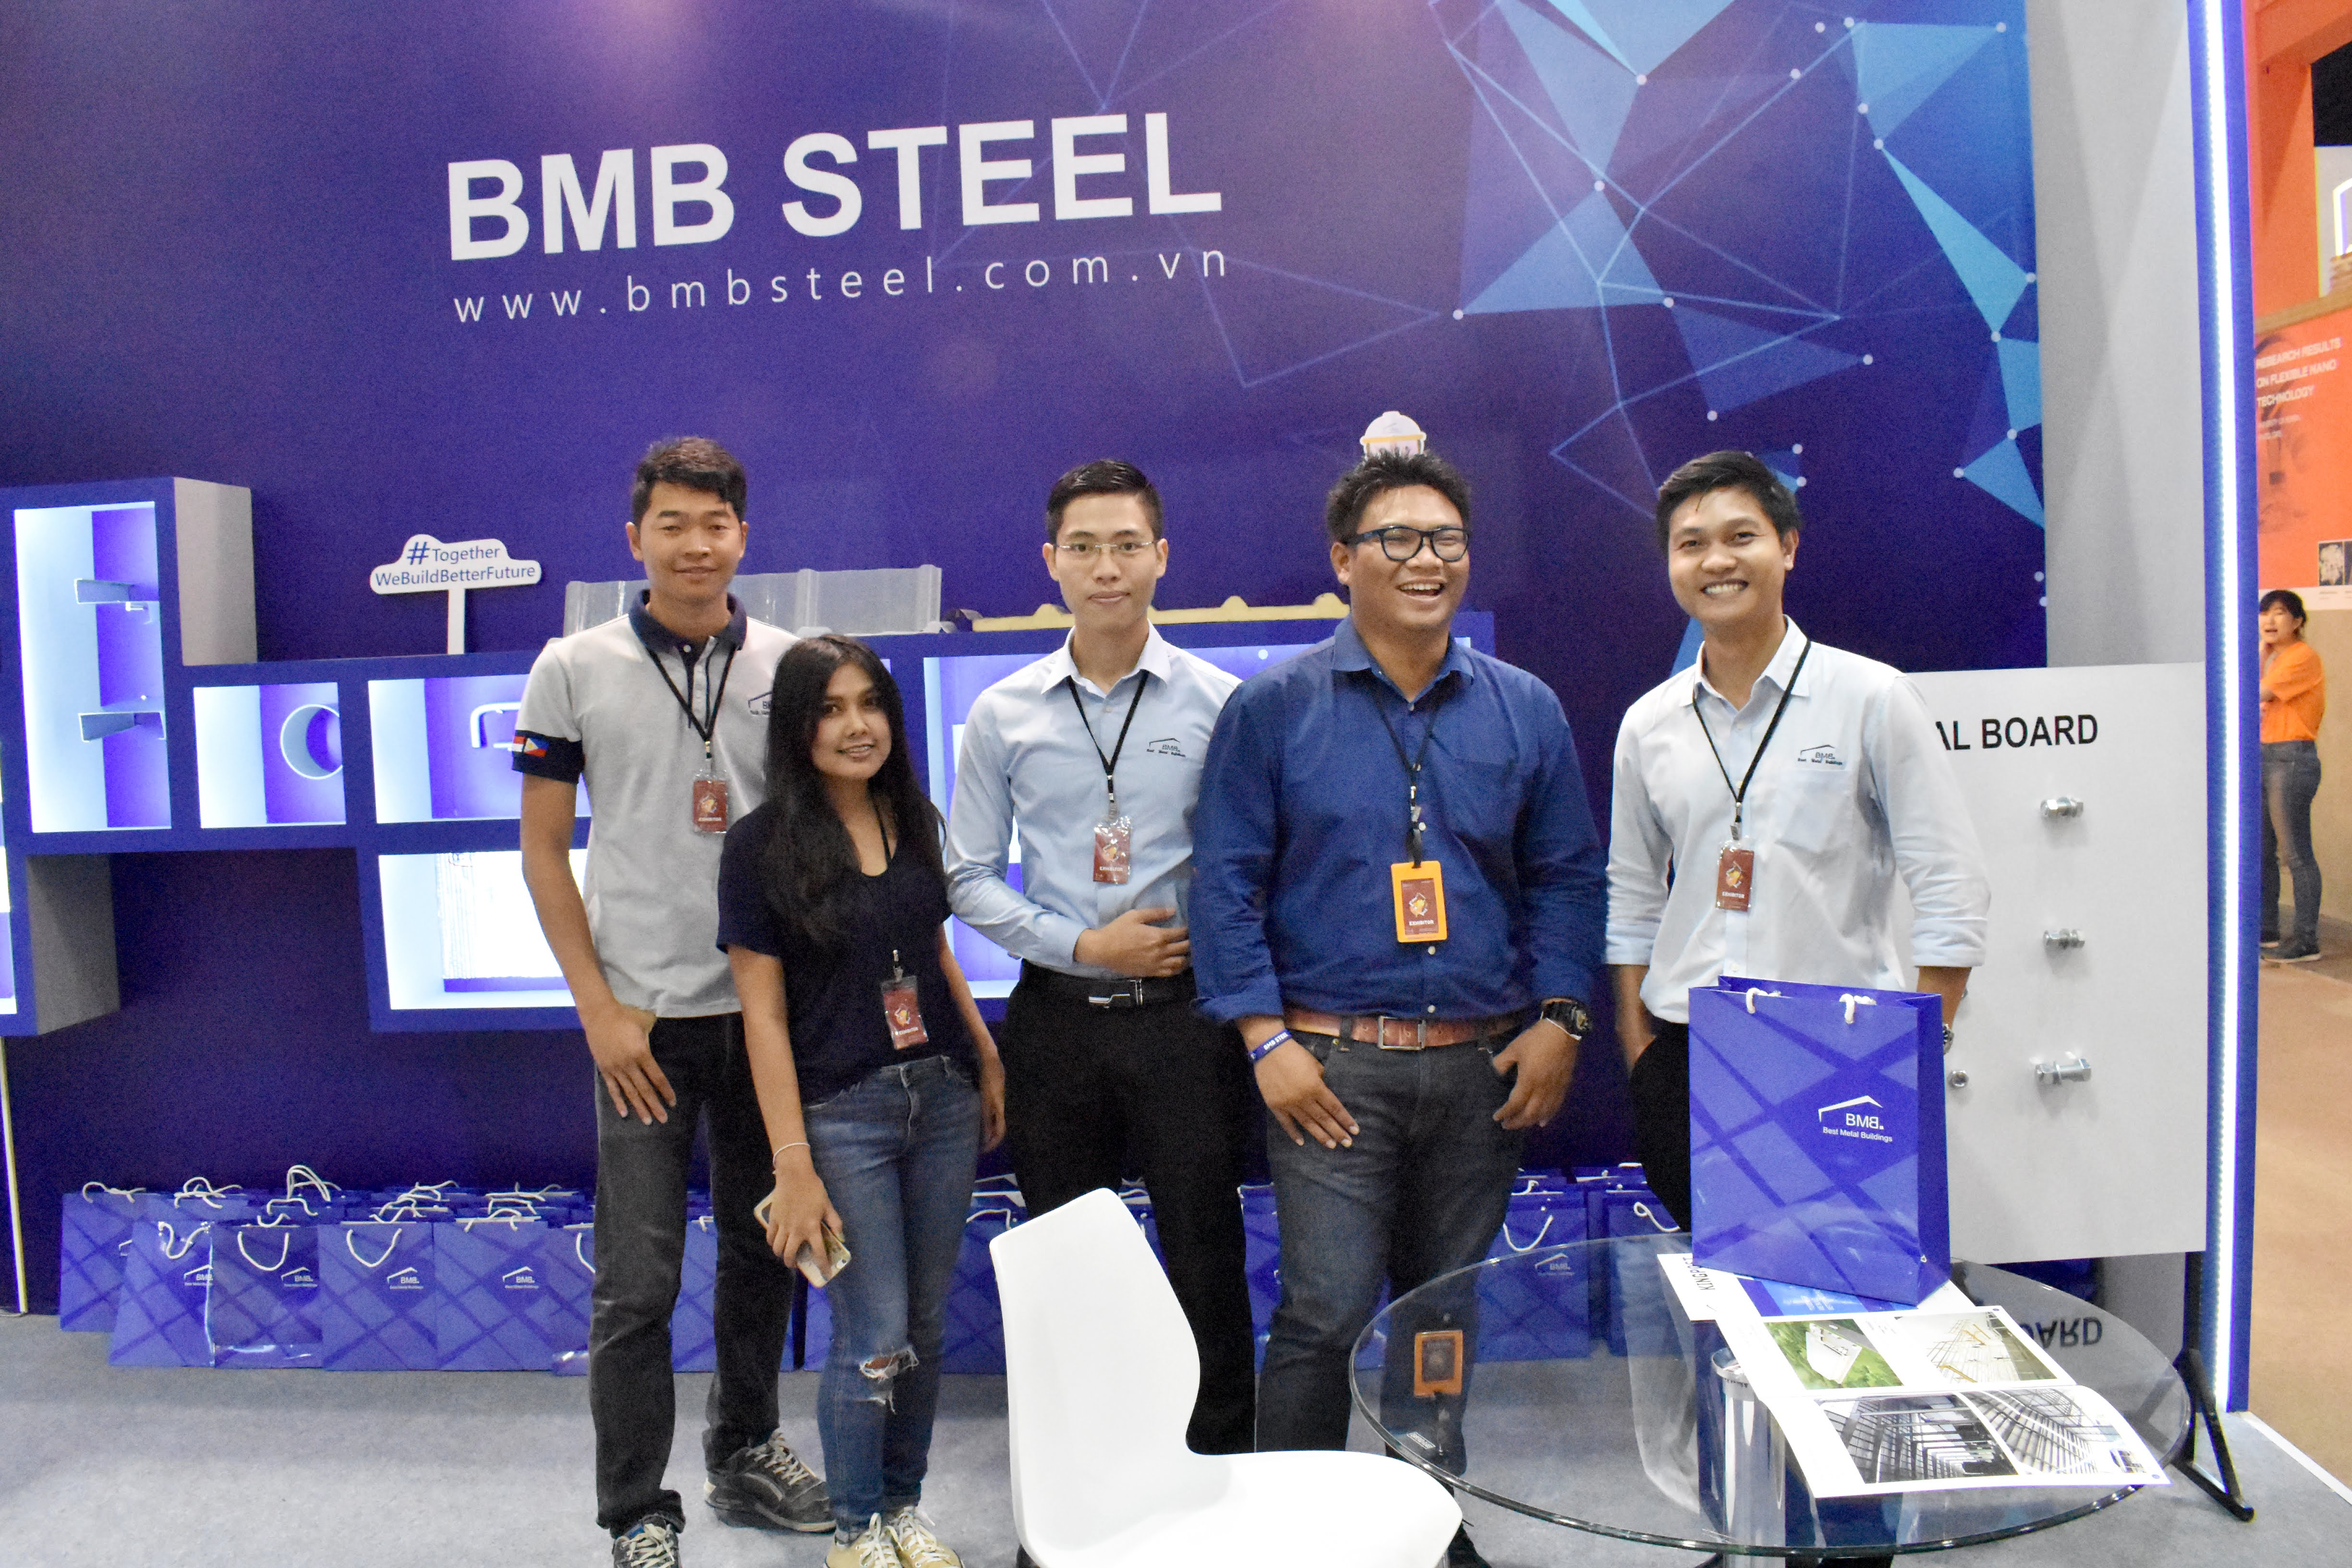 BMB Steel participated Thai Architect'18 expo in Thailand 7